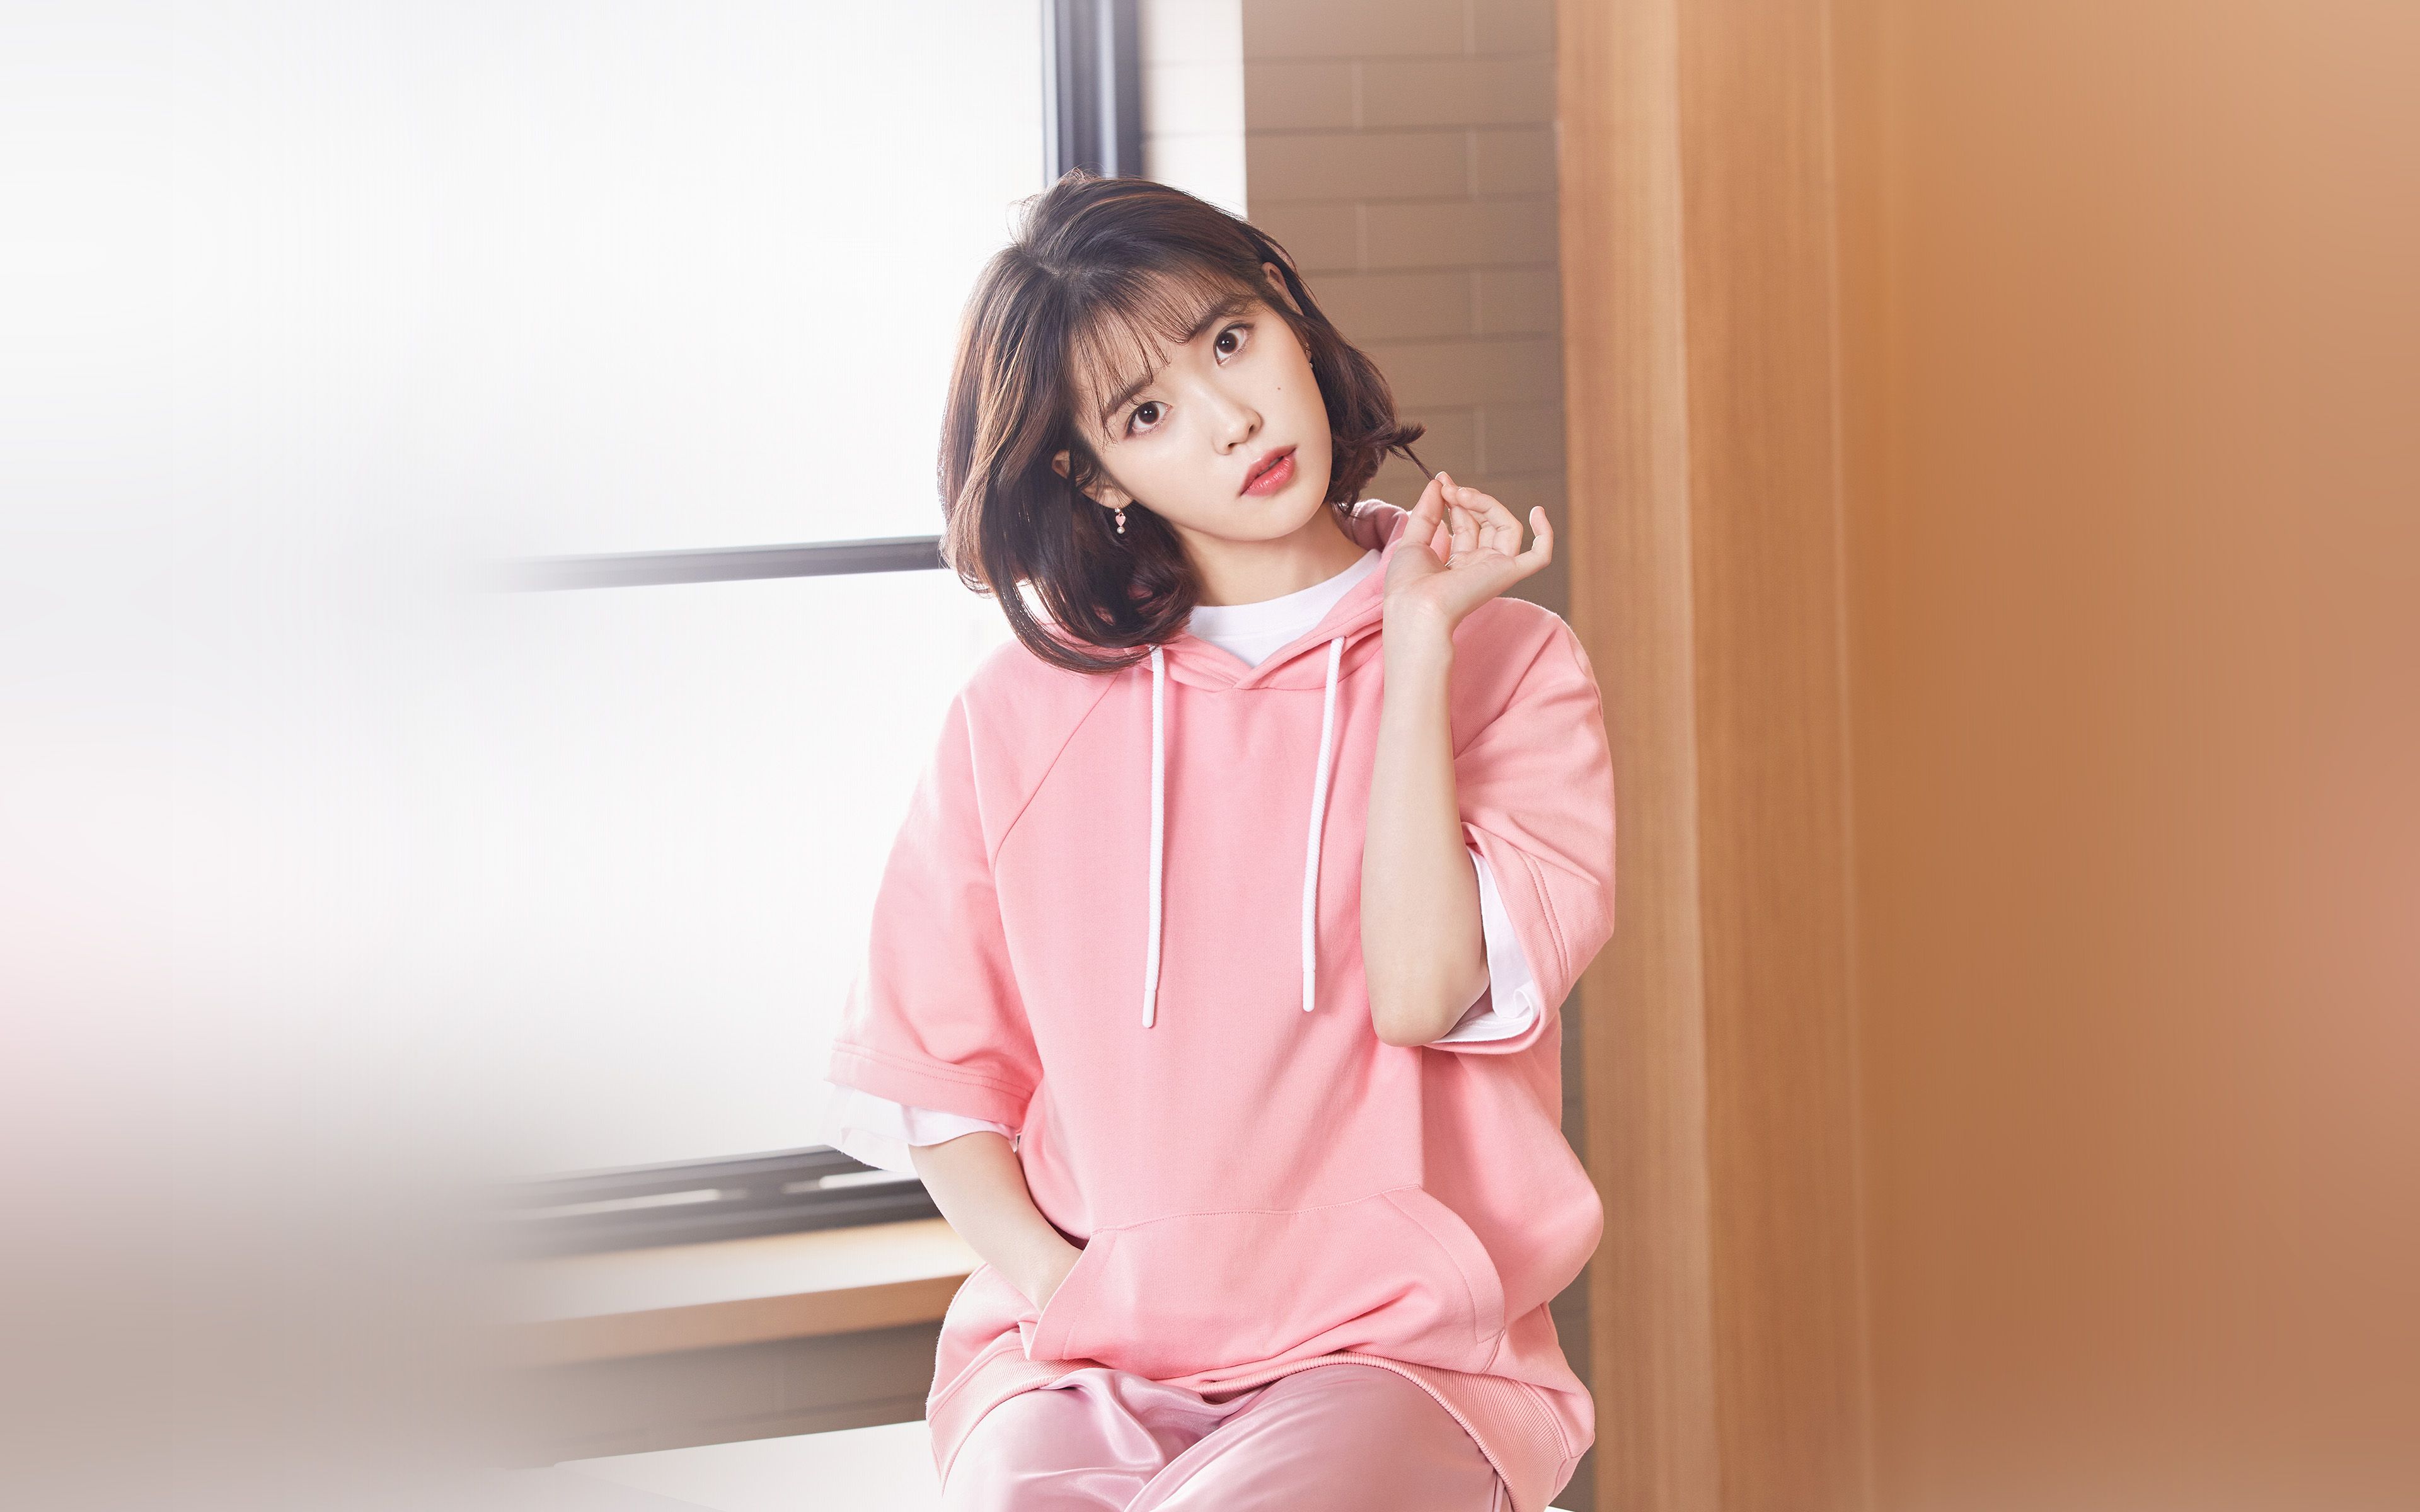 Iu Girl Pink Kpop Singer Asian Celebrity Music Wallpaper